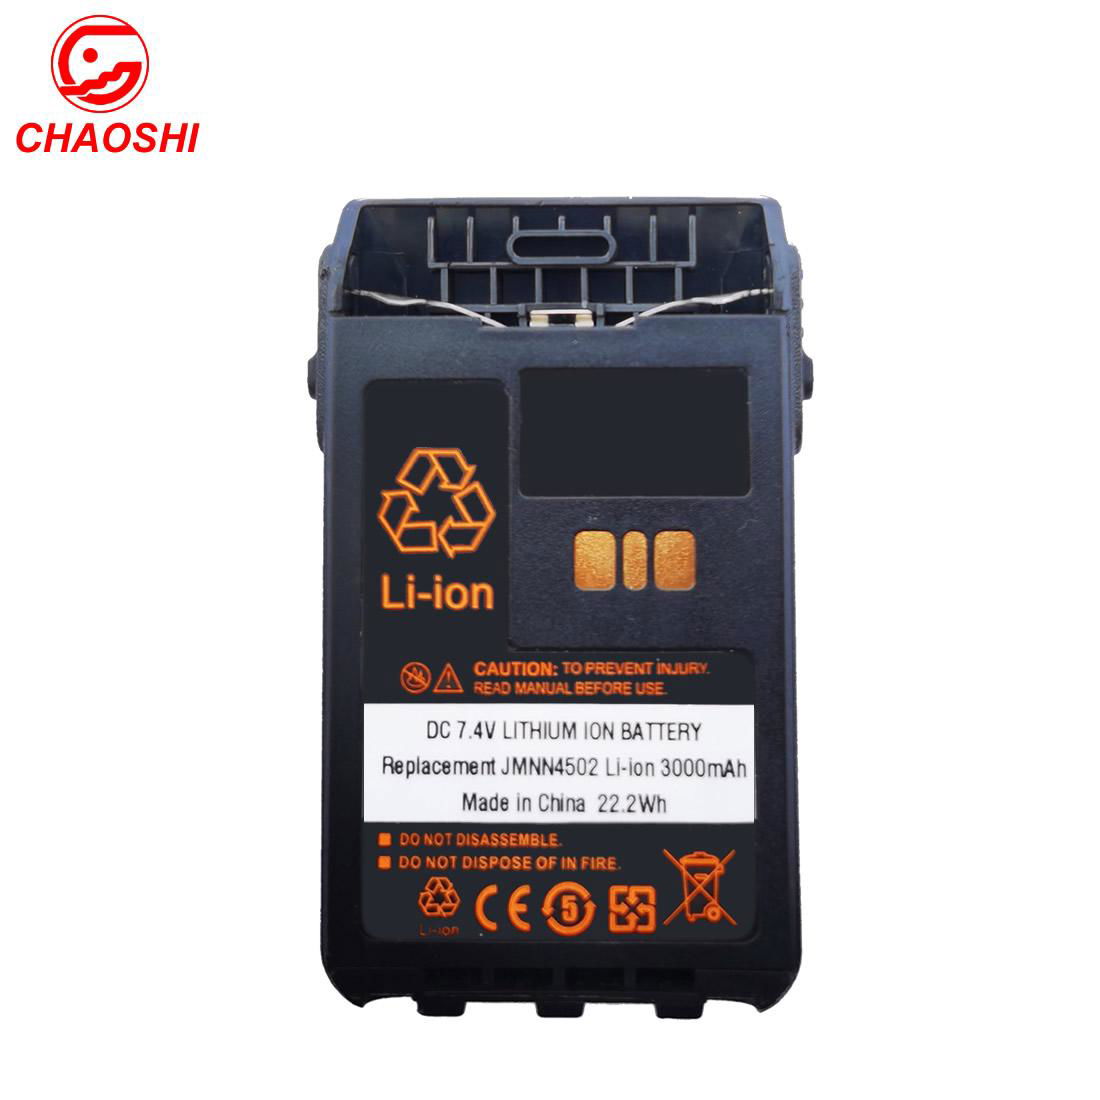 PMNN4502 Battery For DP3441, DP3441e, DP3661, DP3661E, XiR E8600 4